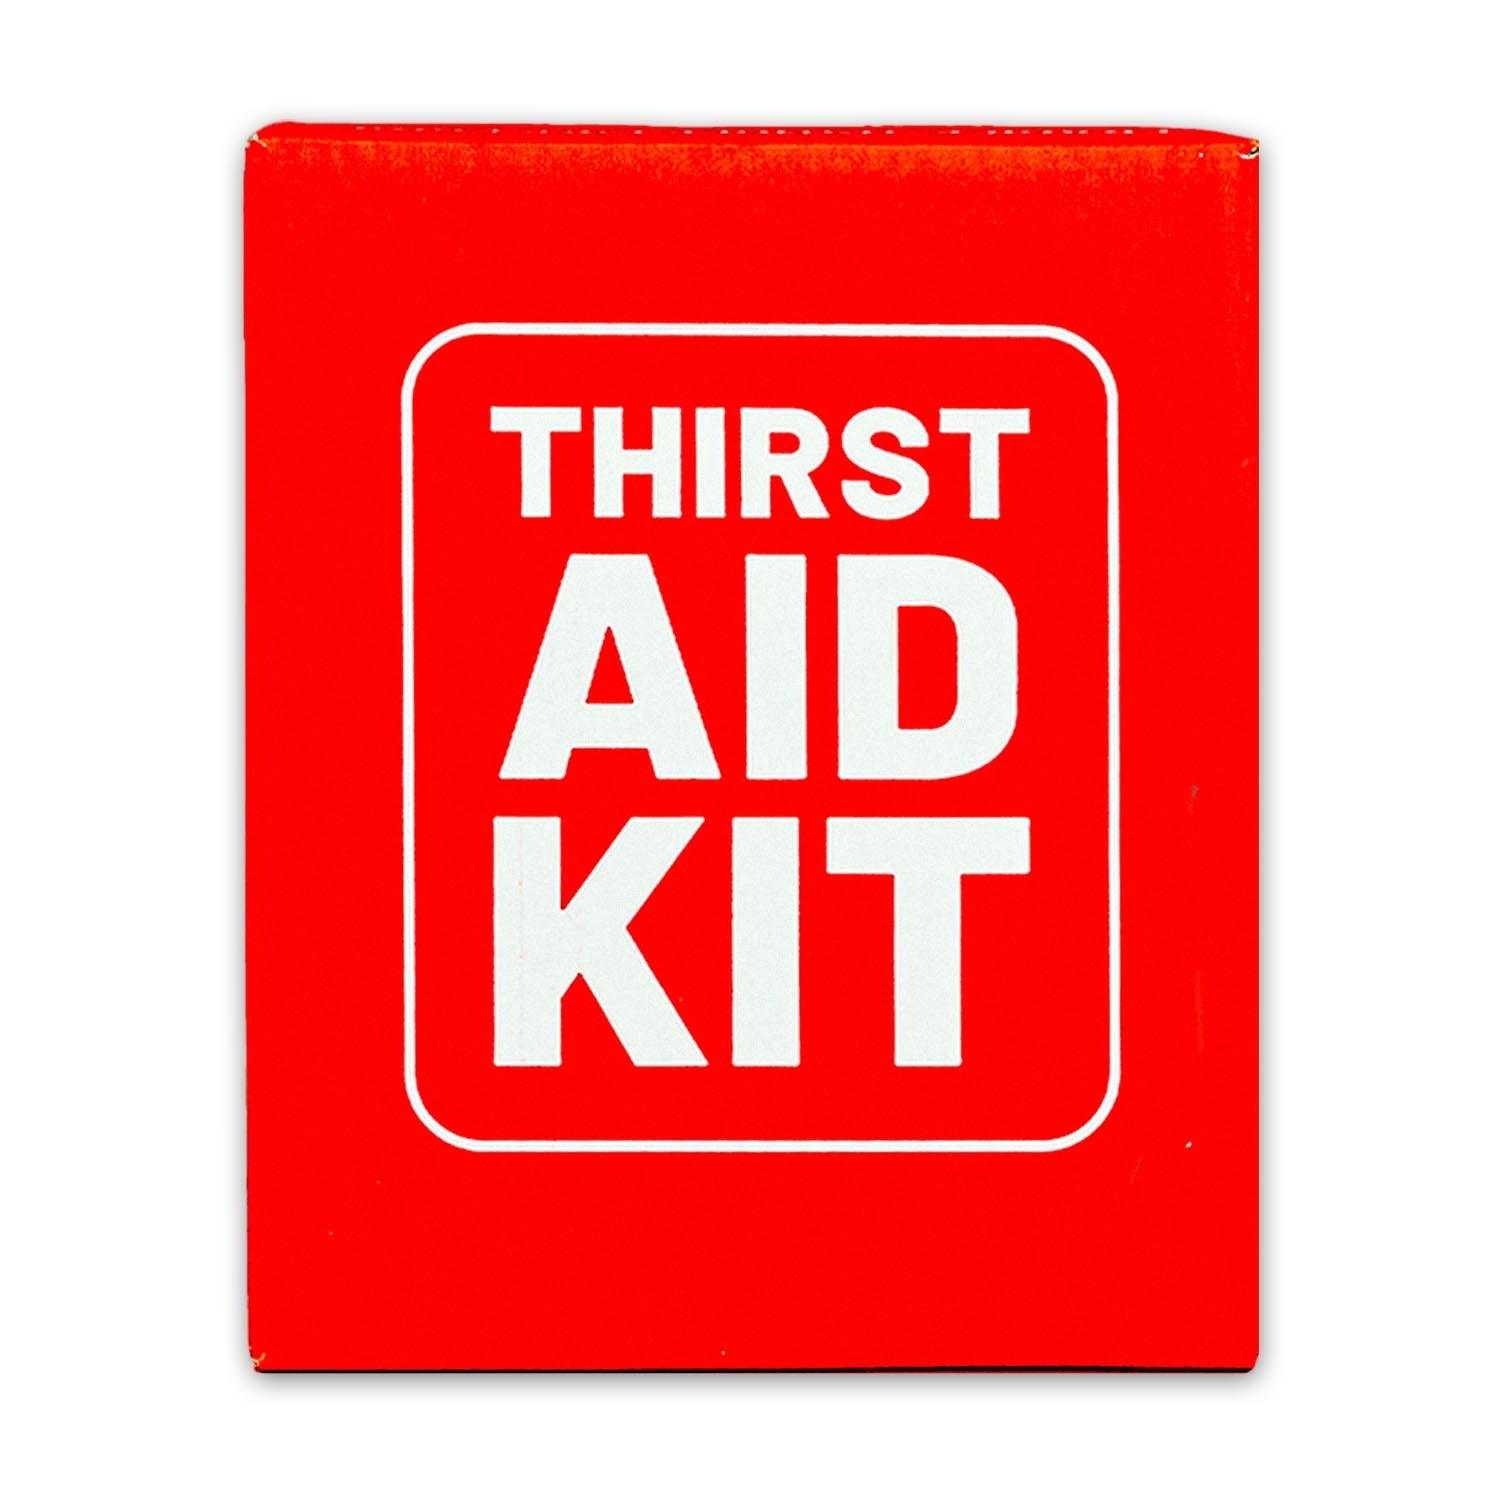 The Thirst Aid Kit